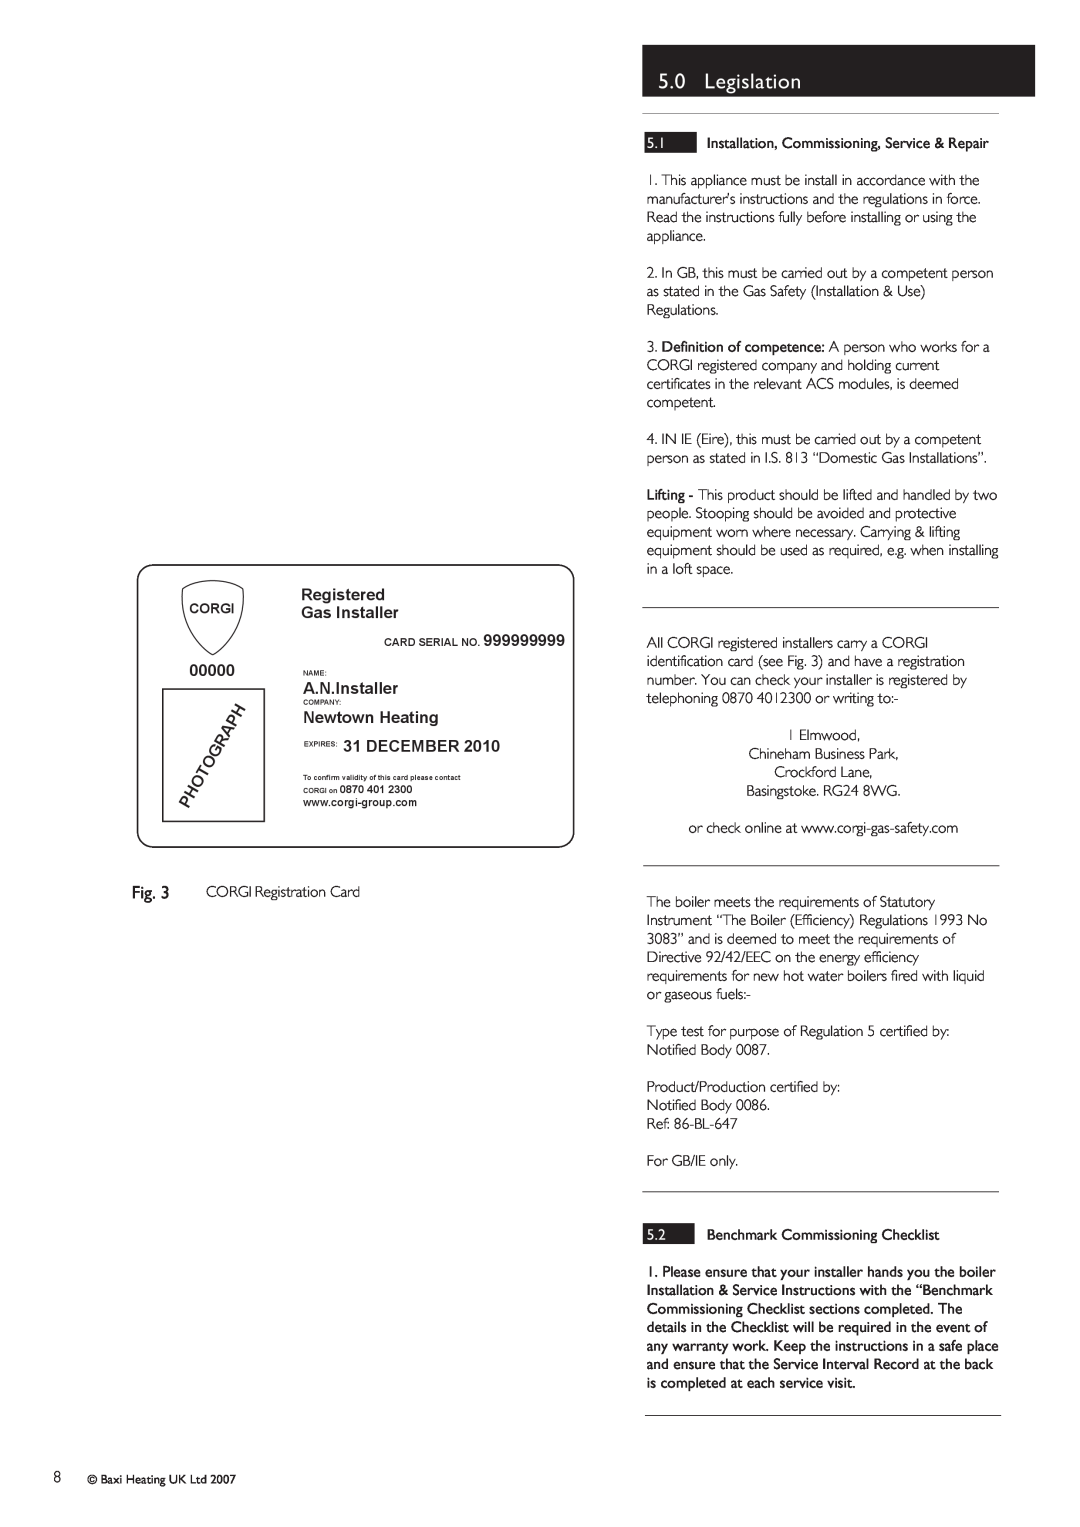 Baxi Potterton Promax SL warranty 5.0Legislation, Registered, Gas Installer, 00000, A.N.Installer, Newtown Heating 